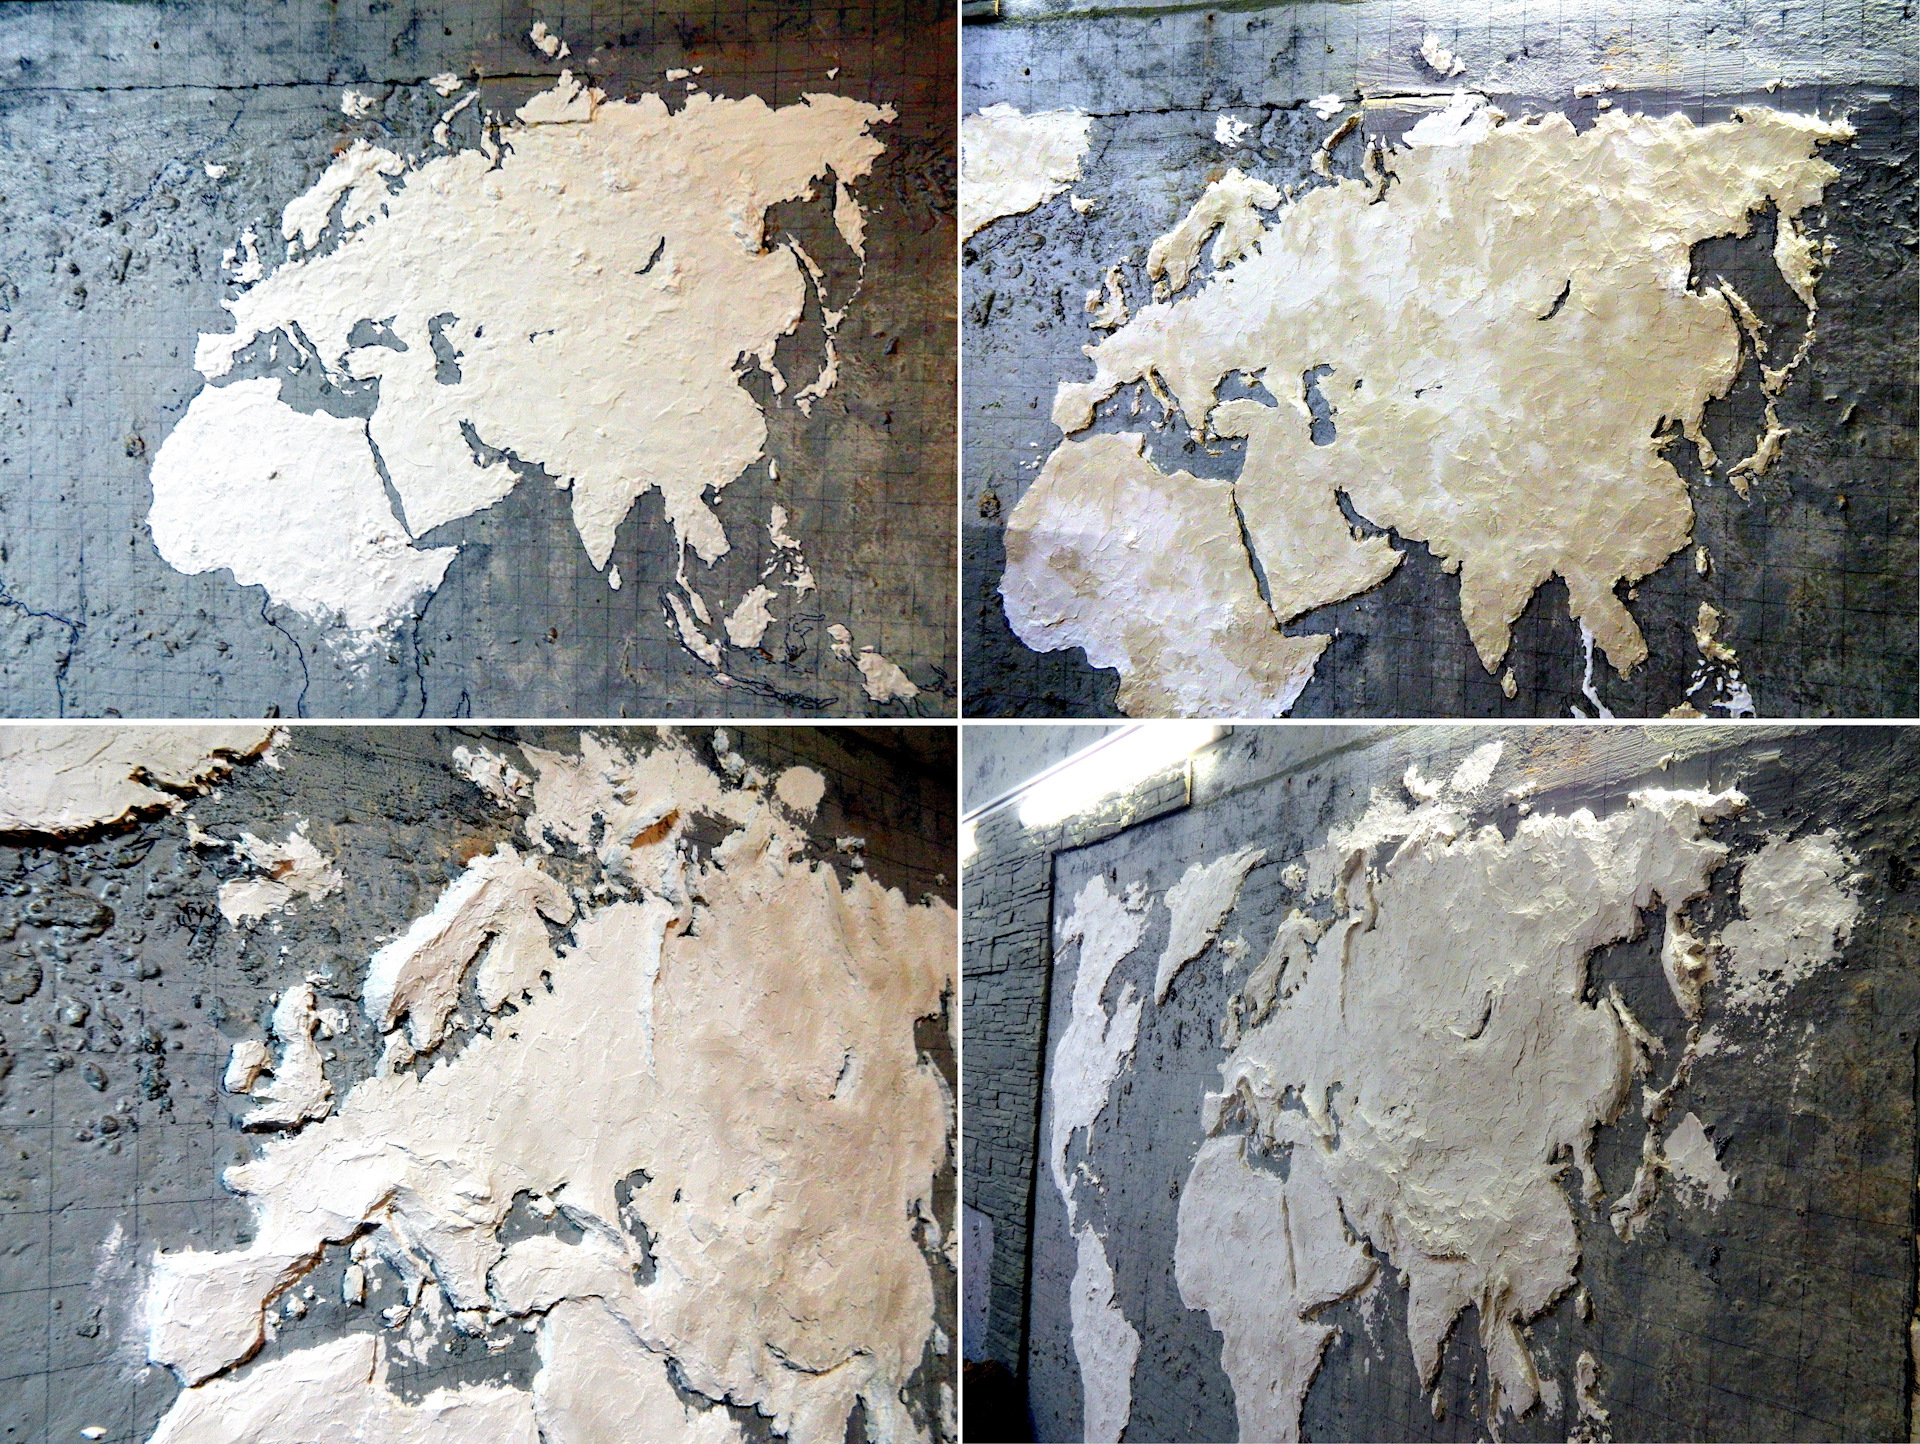 Карта мира из штукатурки на стене